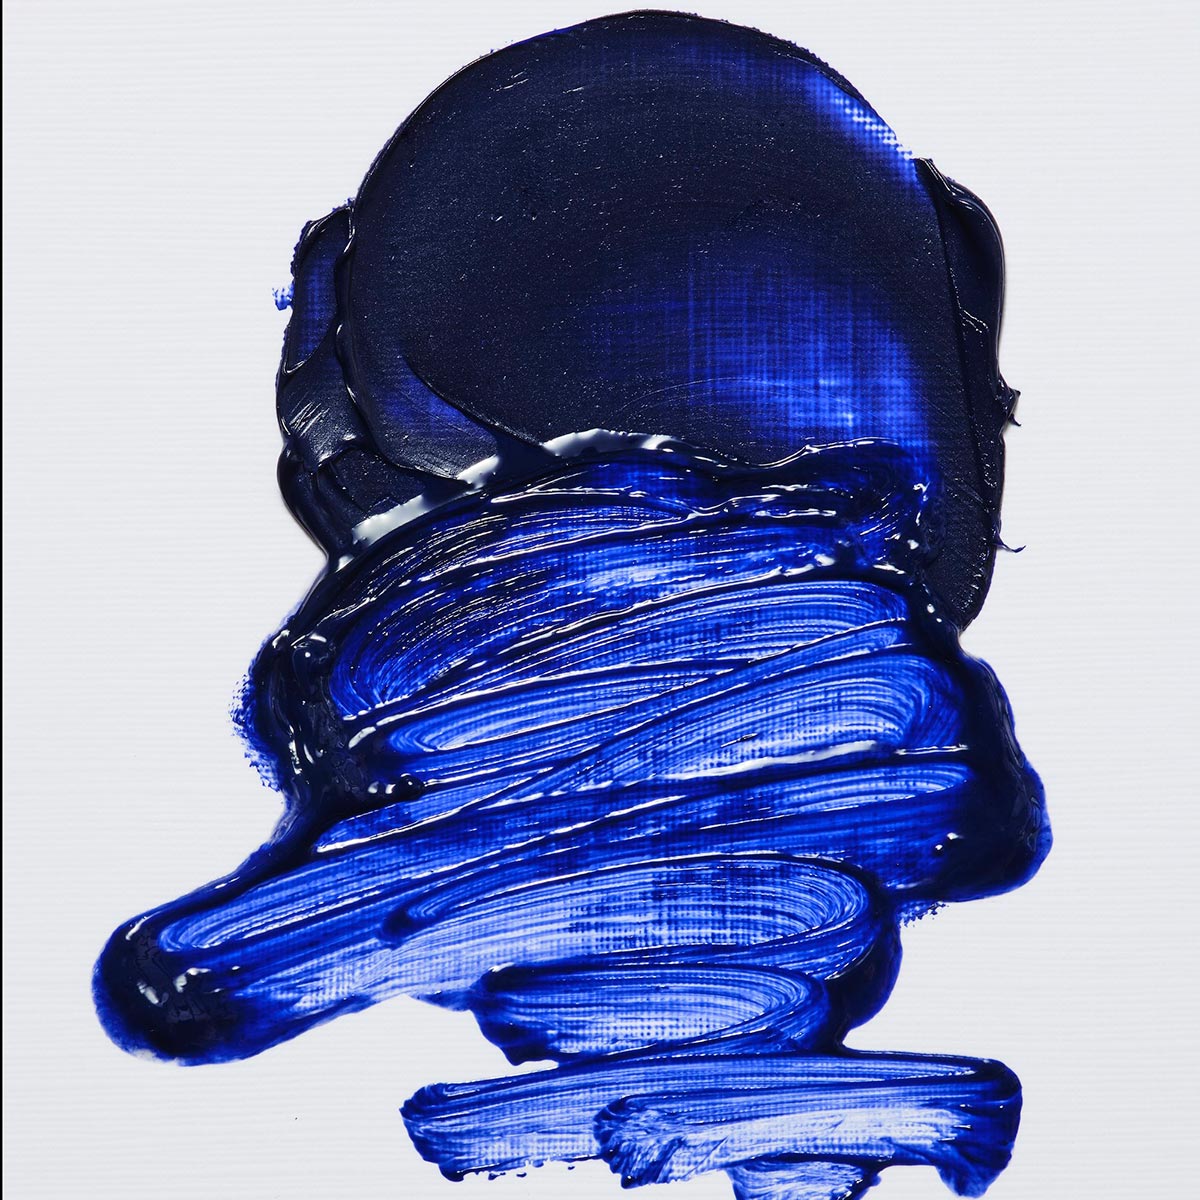 Winsor and Newton - Artists' Oil Colour - 37ml - Smalt S2